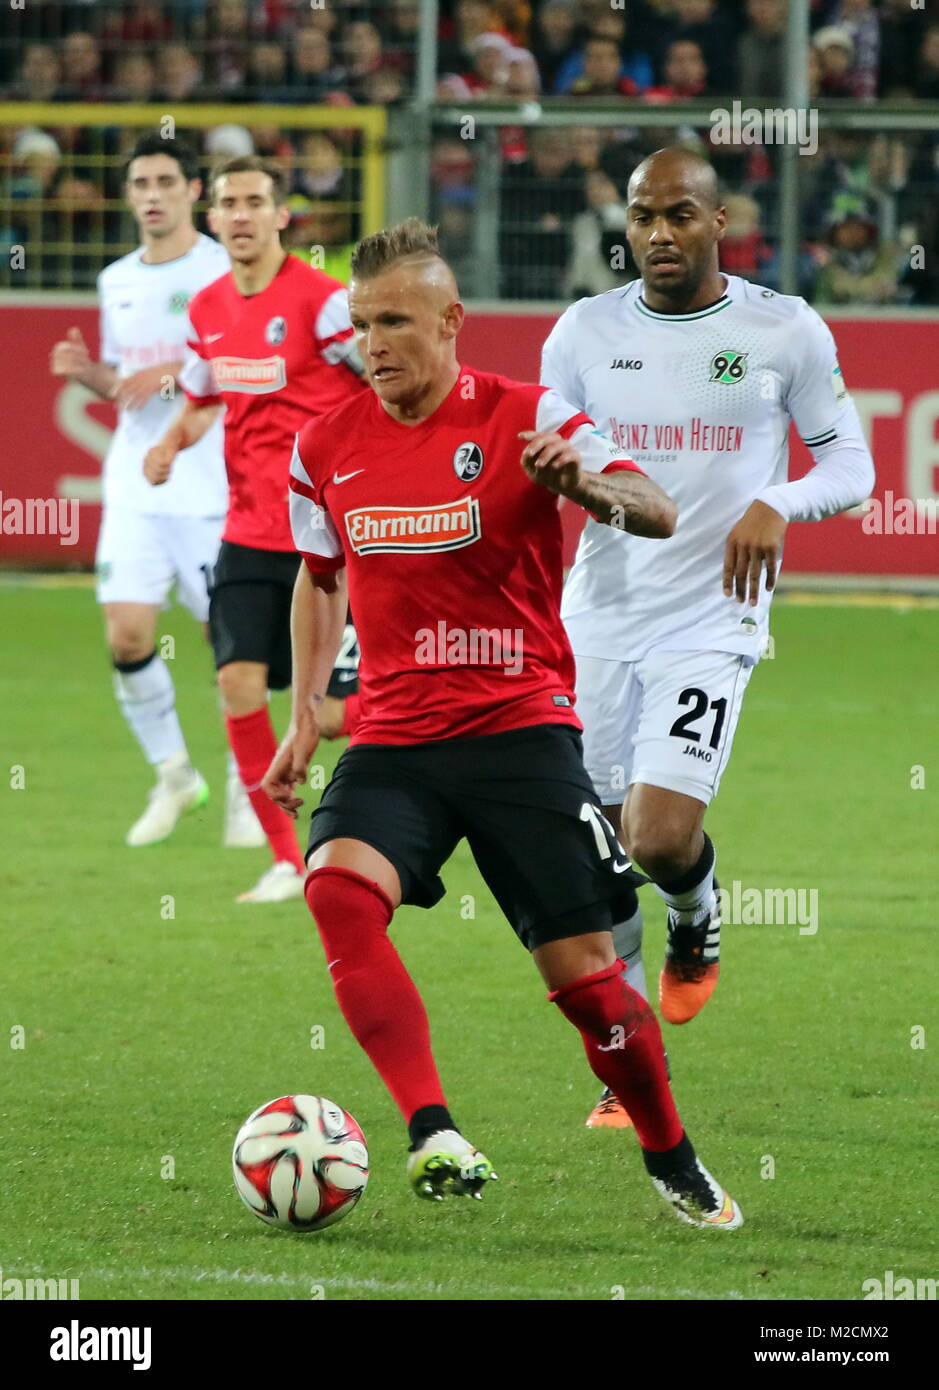 Jonathan Jonny SCHMID, Fußball-Bundesliga 14/15: 17. Spieltag, SC Freiburg  vs. Hannover 96 Stock Photo - Alamy